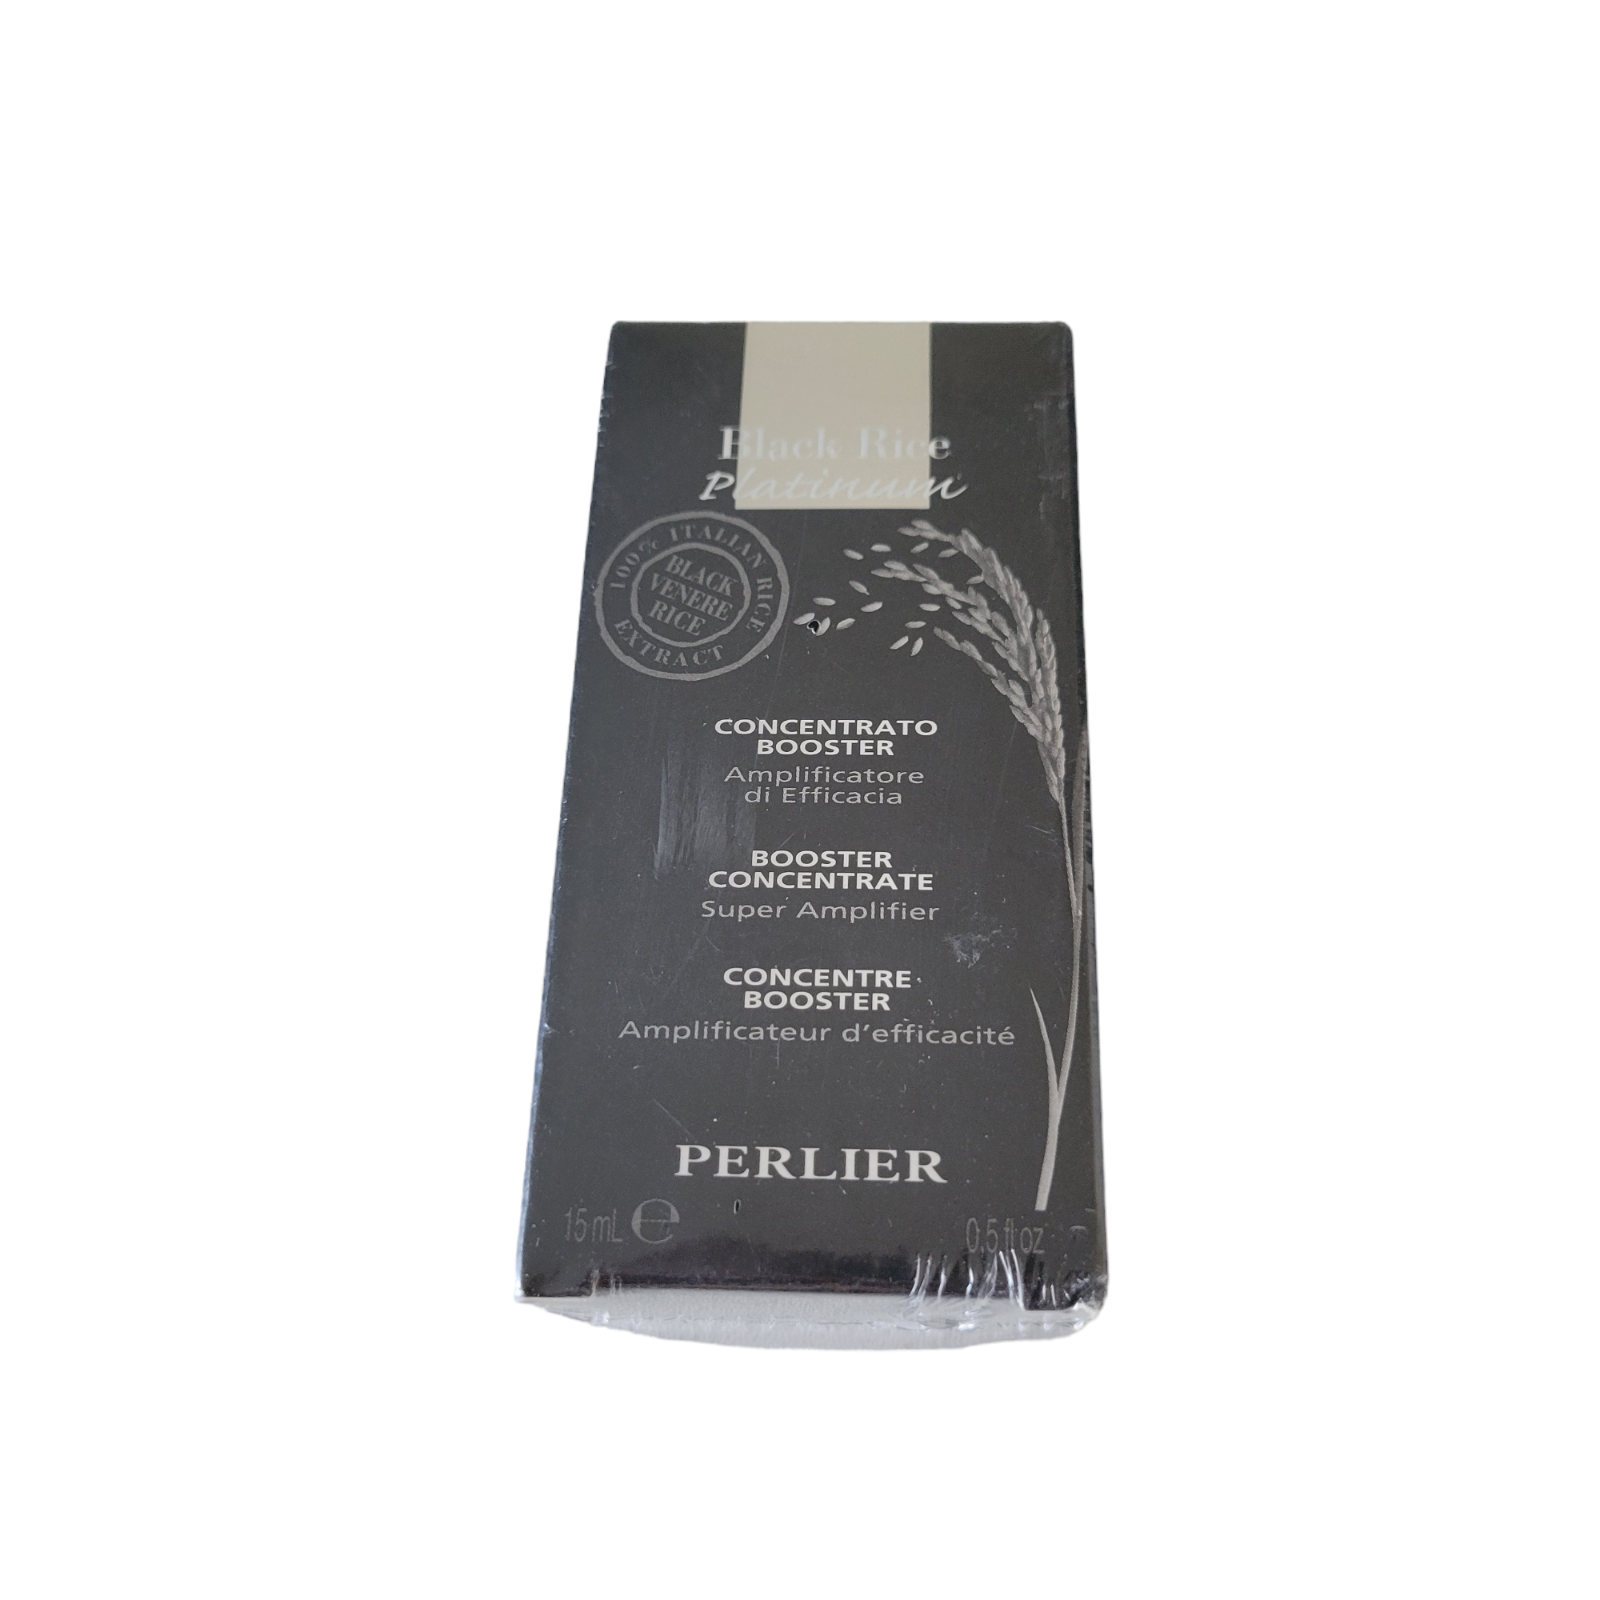 PERLIER Black Rice Platinum Booster Concentrate Super Amplifier 0.5 oz Sealed - $16.66